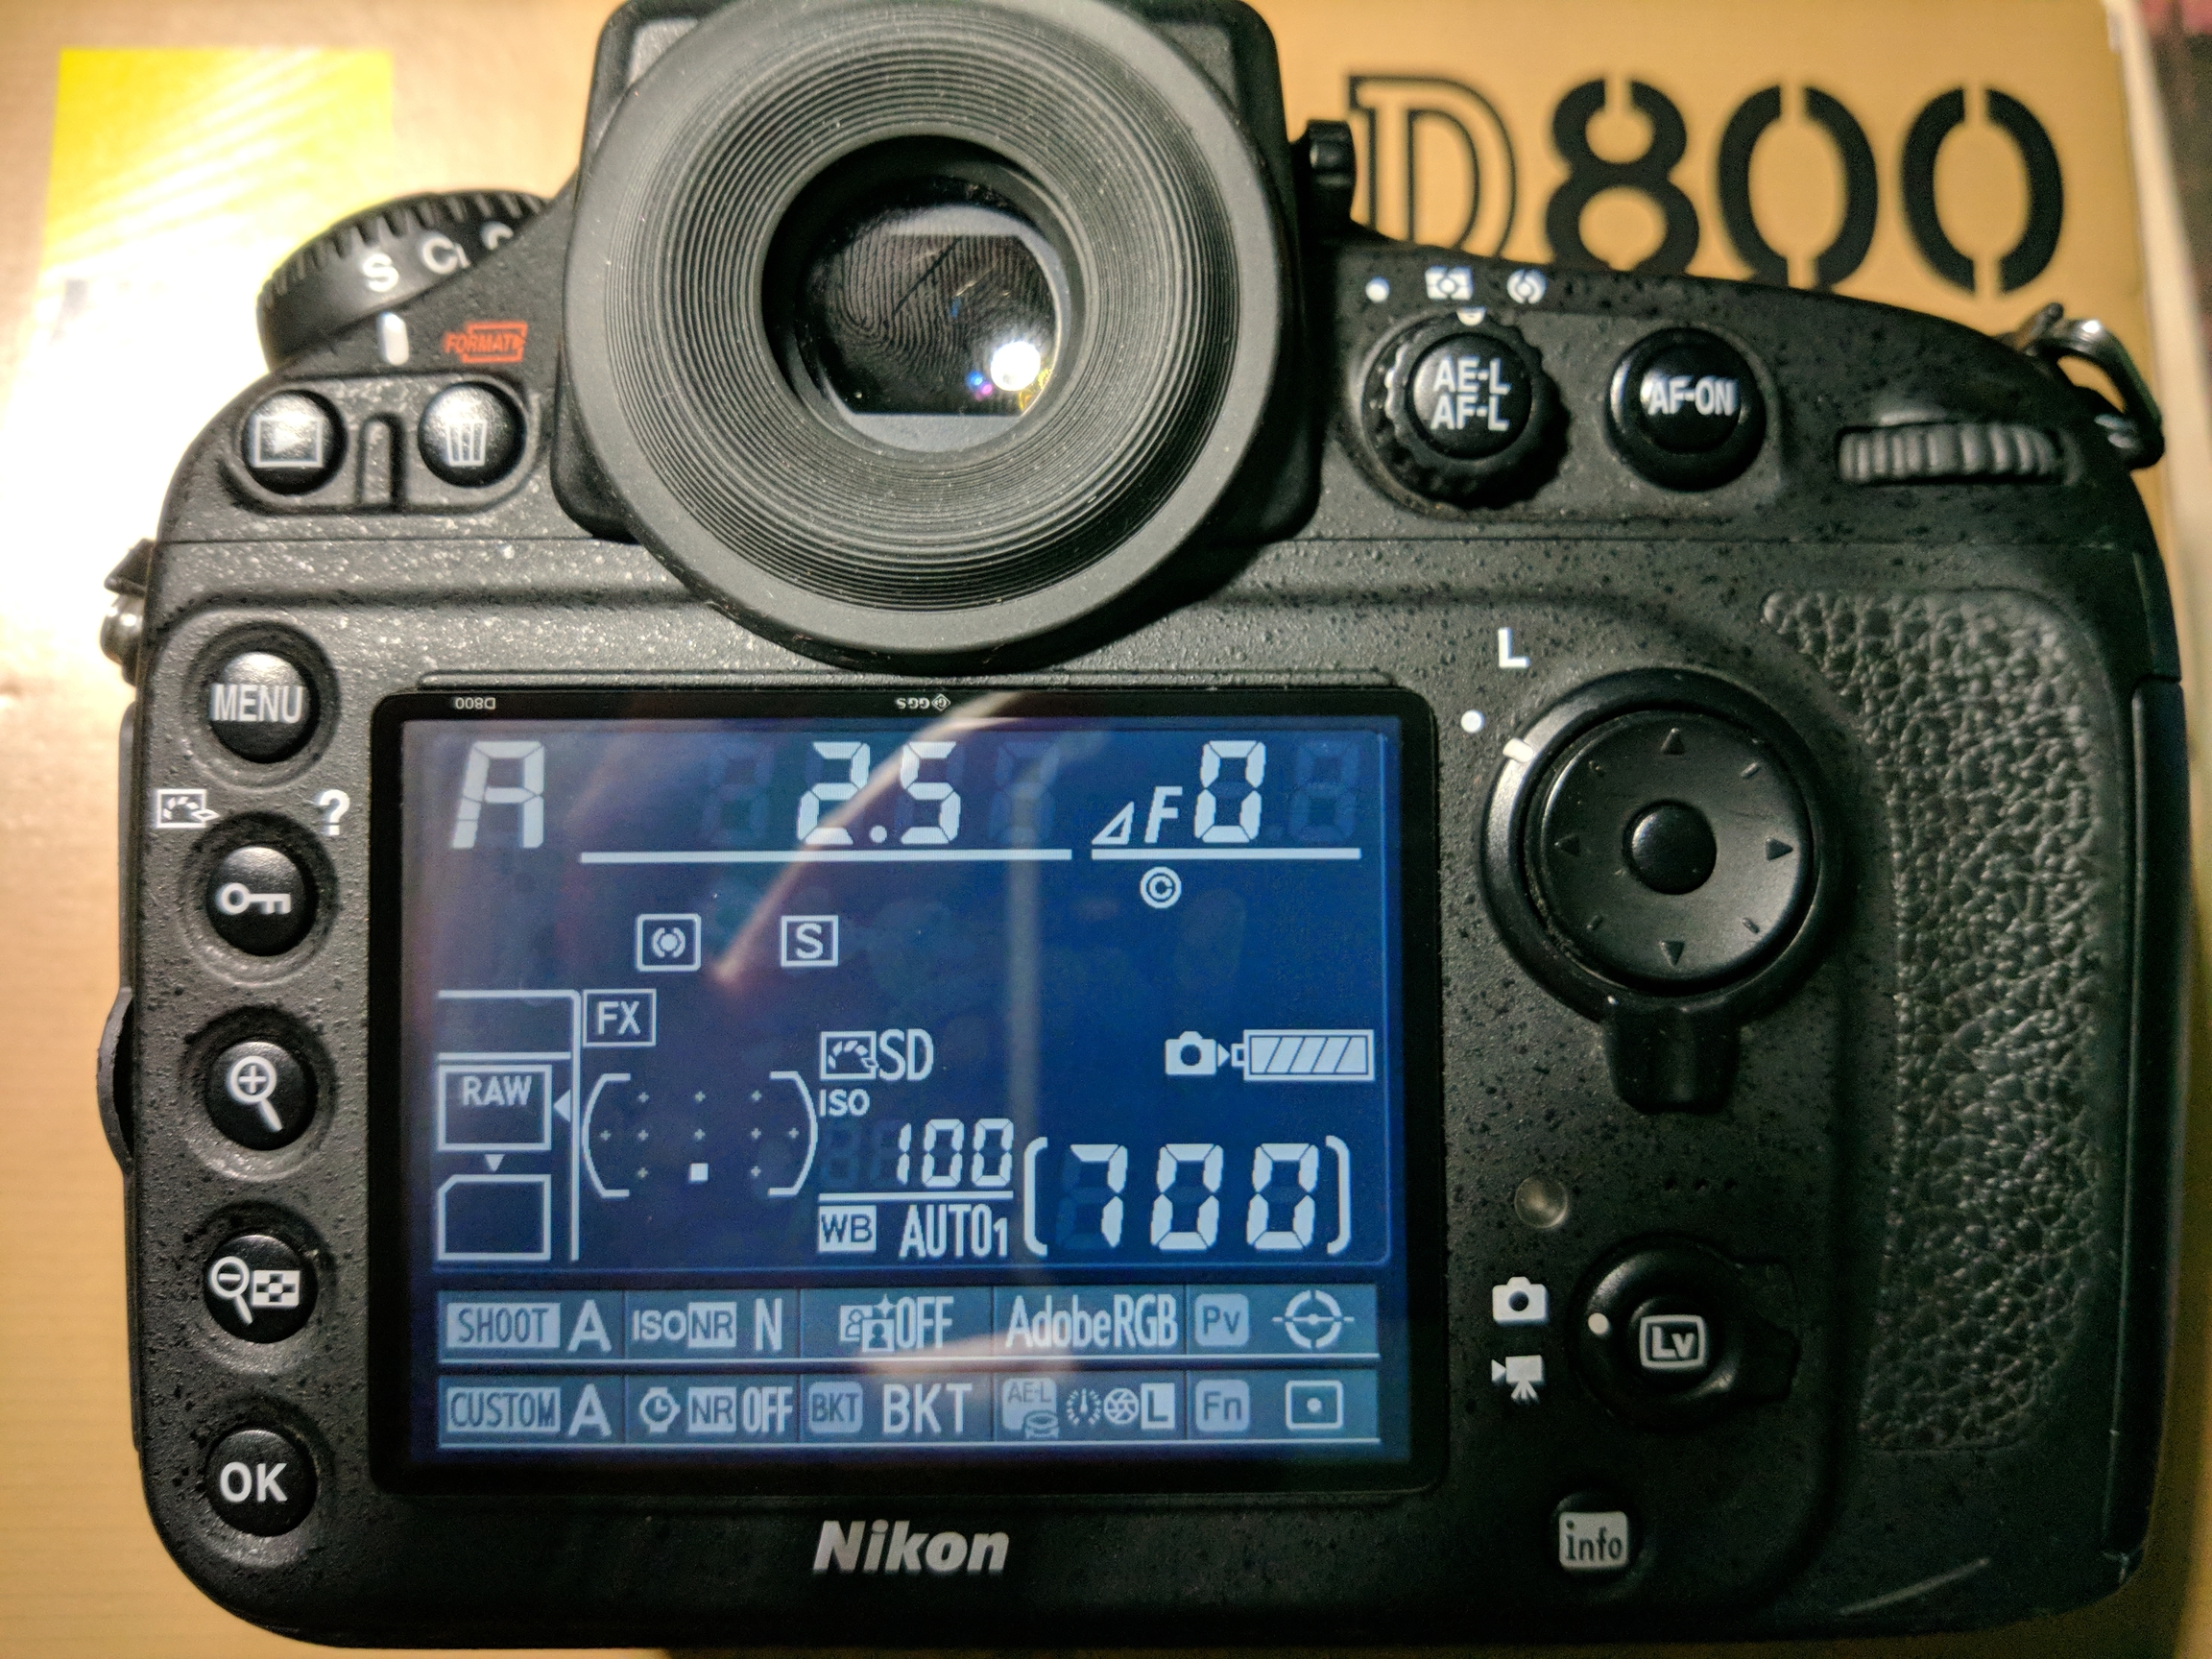 2nd hand Nikon D800 on sale